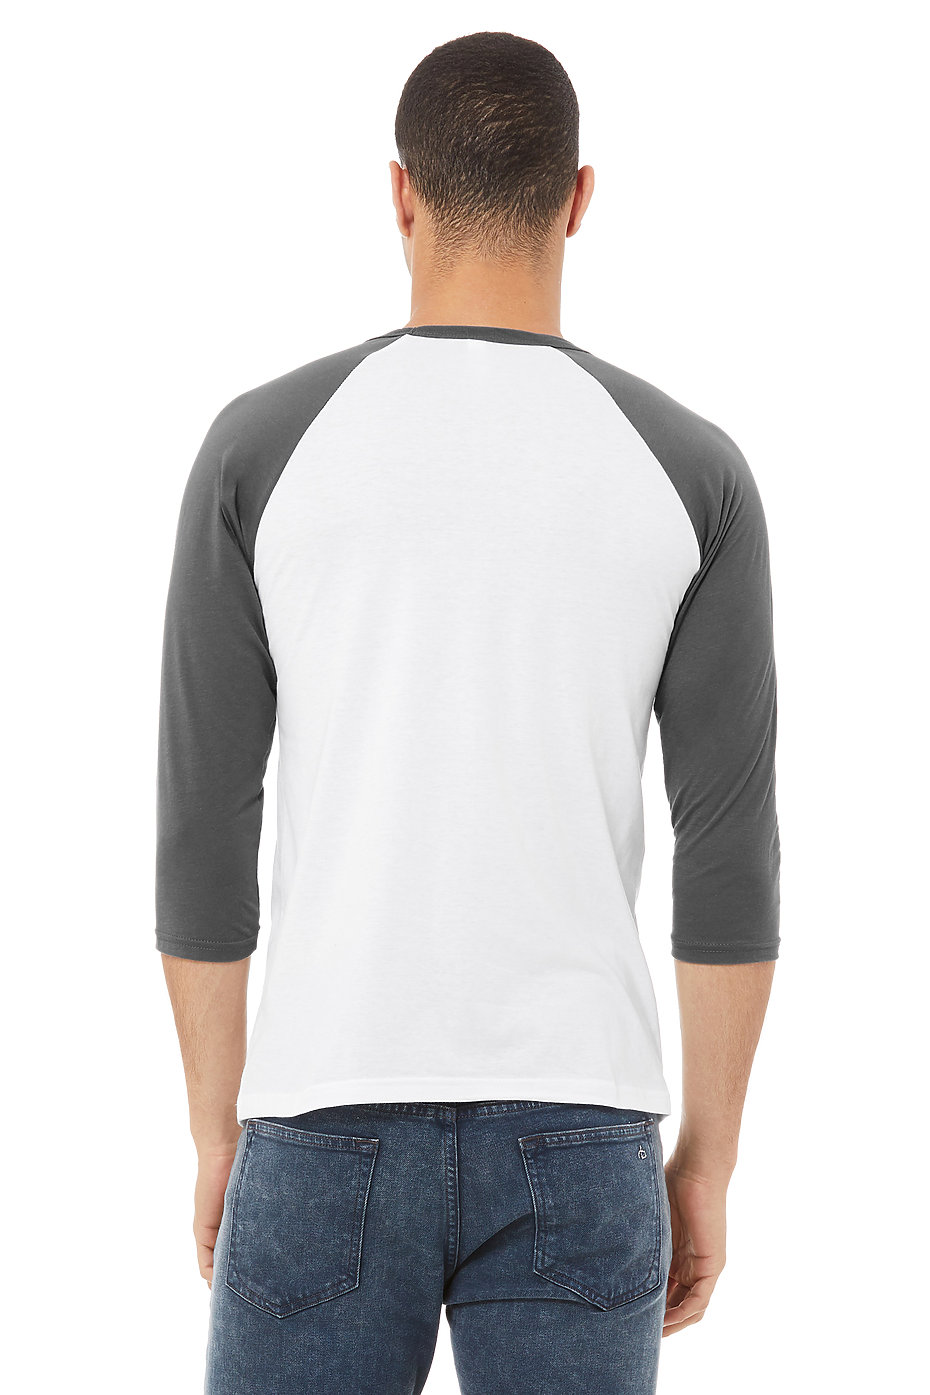 Mens Baseball Team T-Shirt Round Neck Baseball Short-Sleeve Casual Top Fashion Tees 